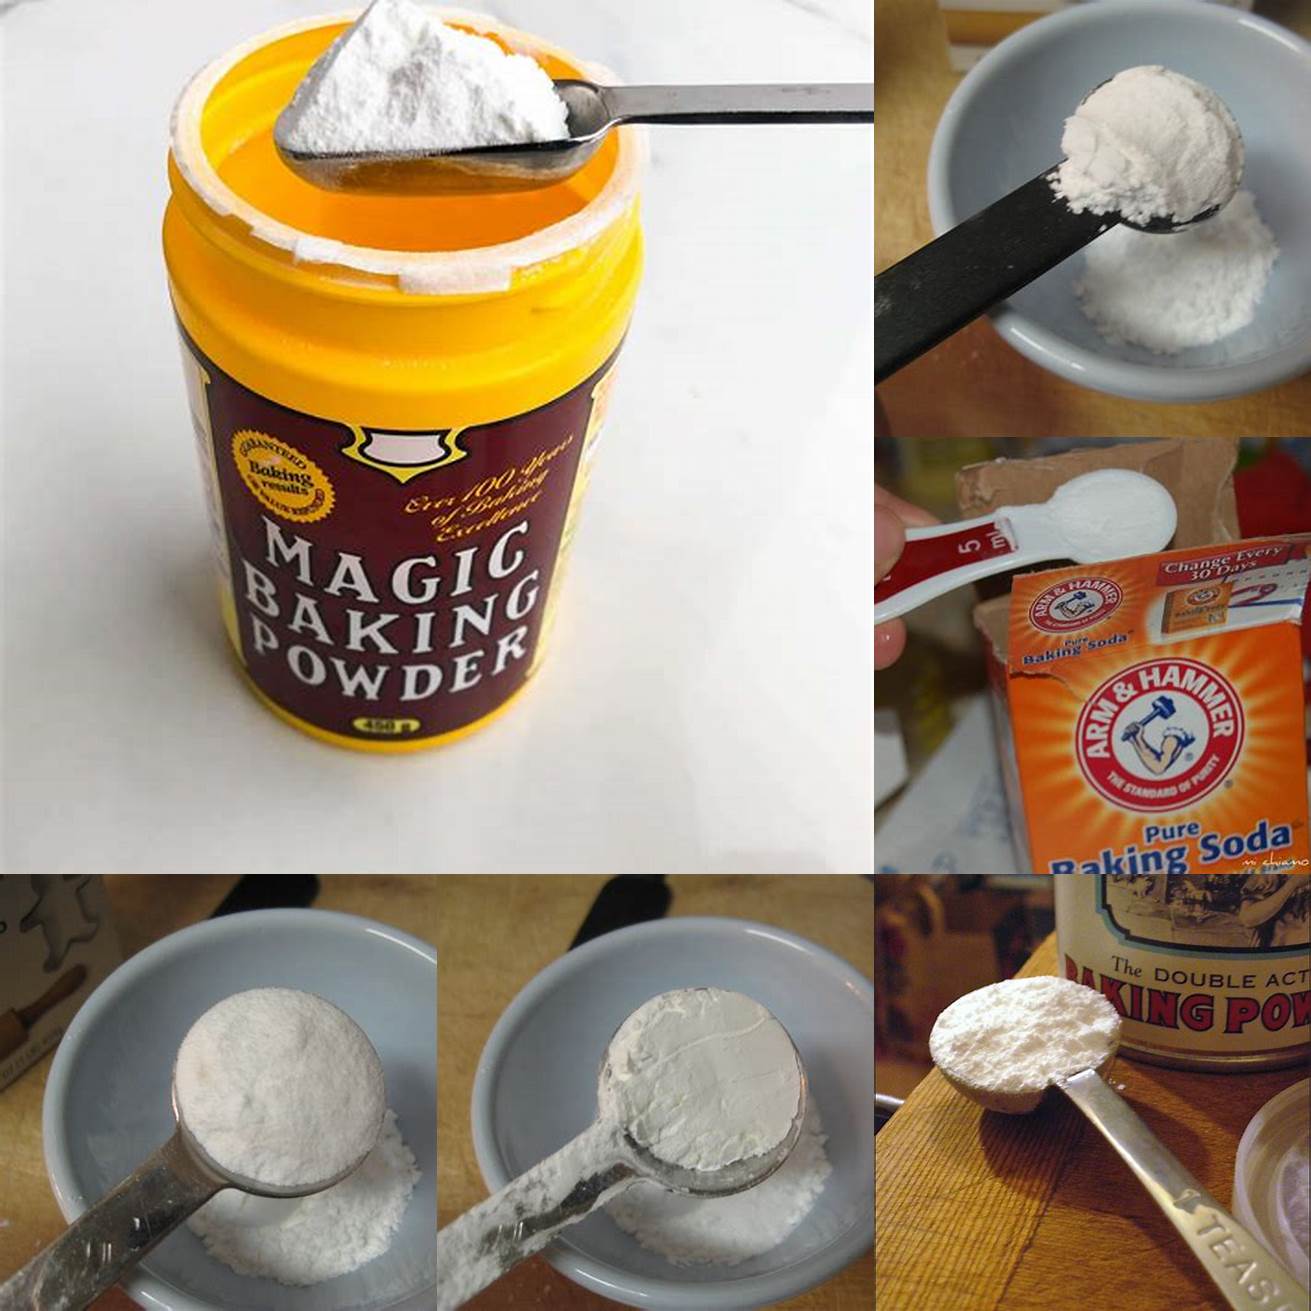 12 teaspoon of baking powder